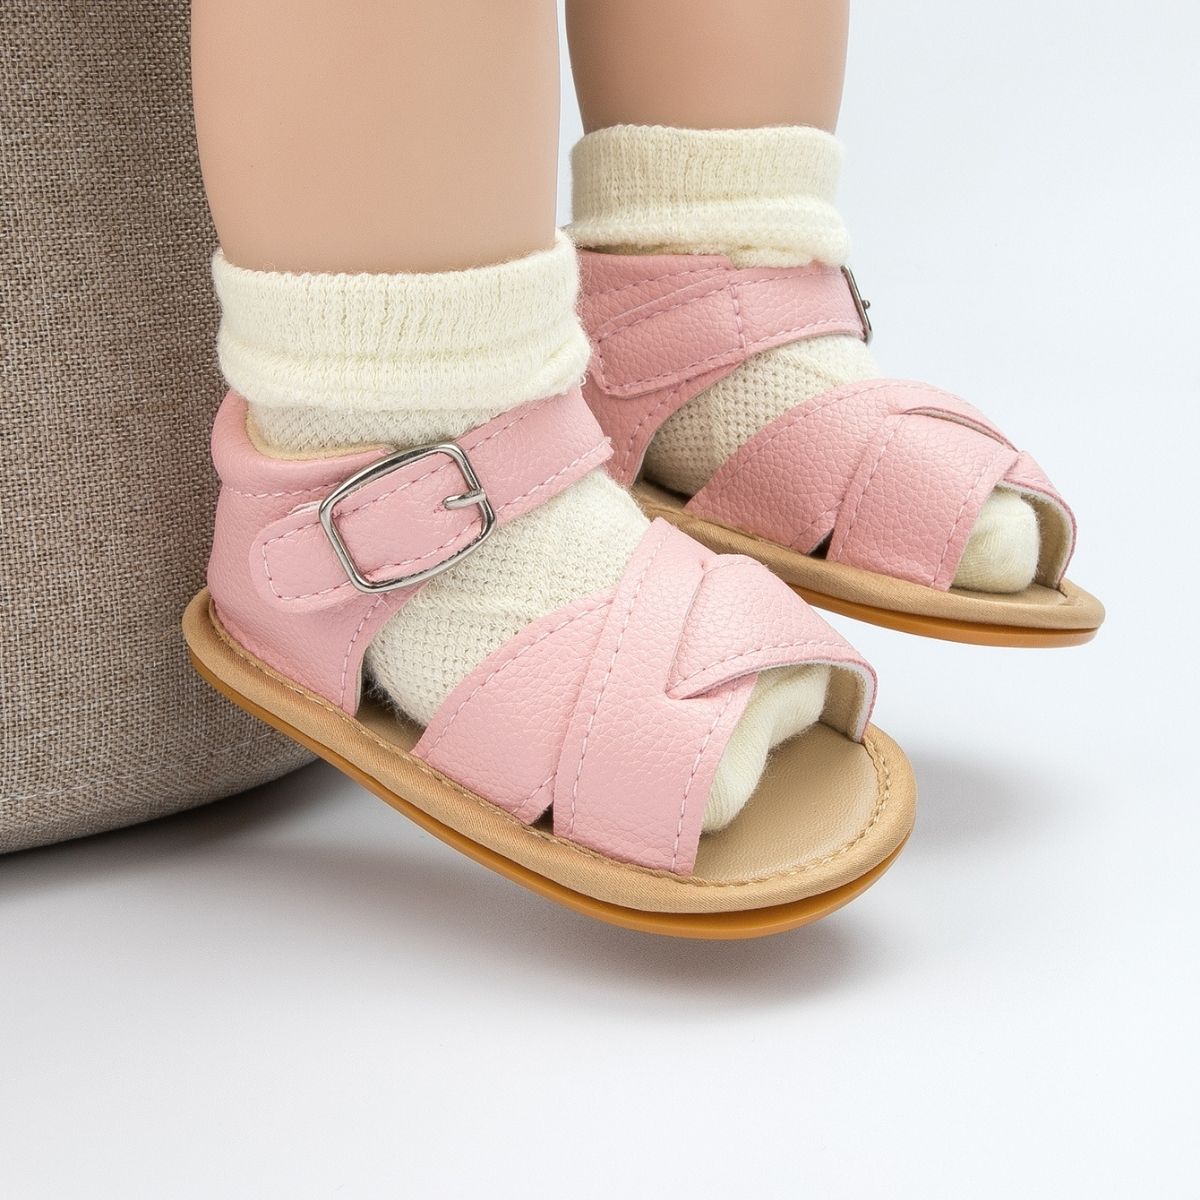 Georgia Soft Sole Sandals - Pink